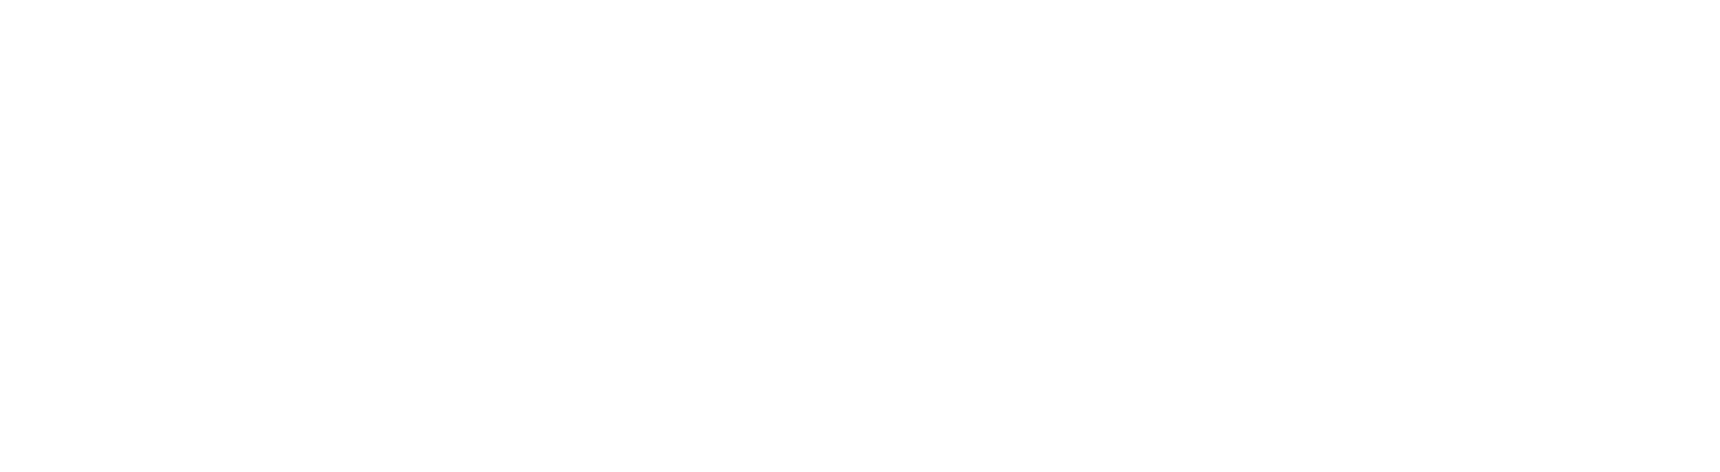 platform-logos - Benchmark